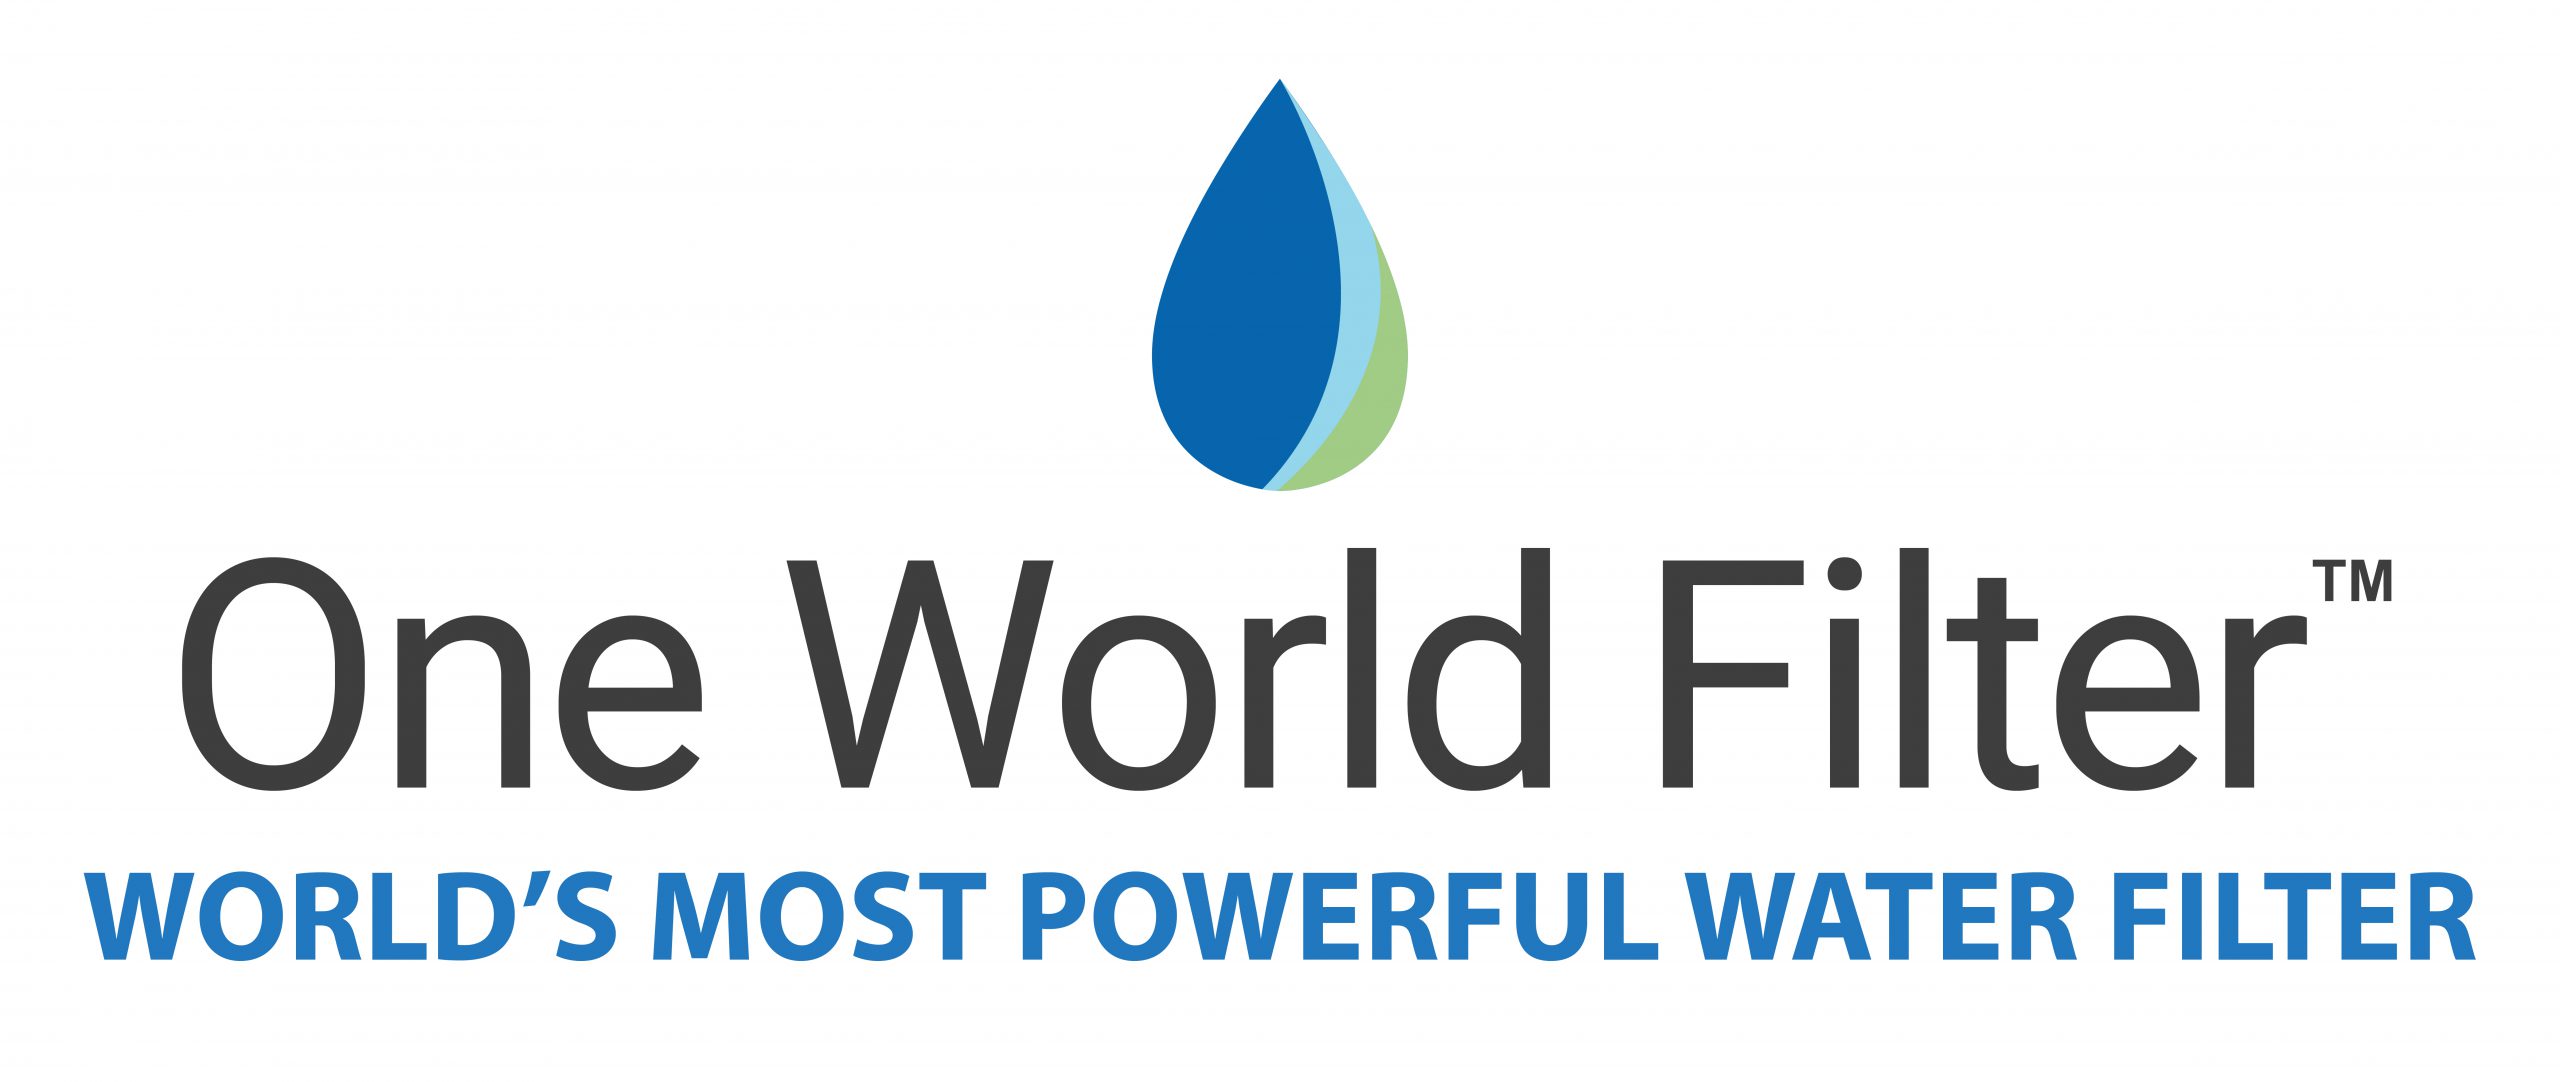 One World Filter logo